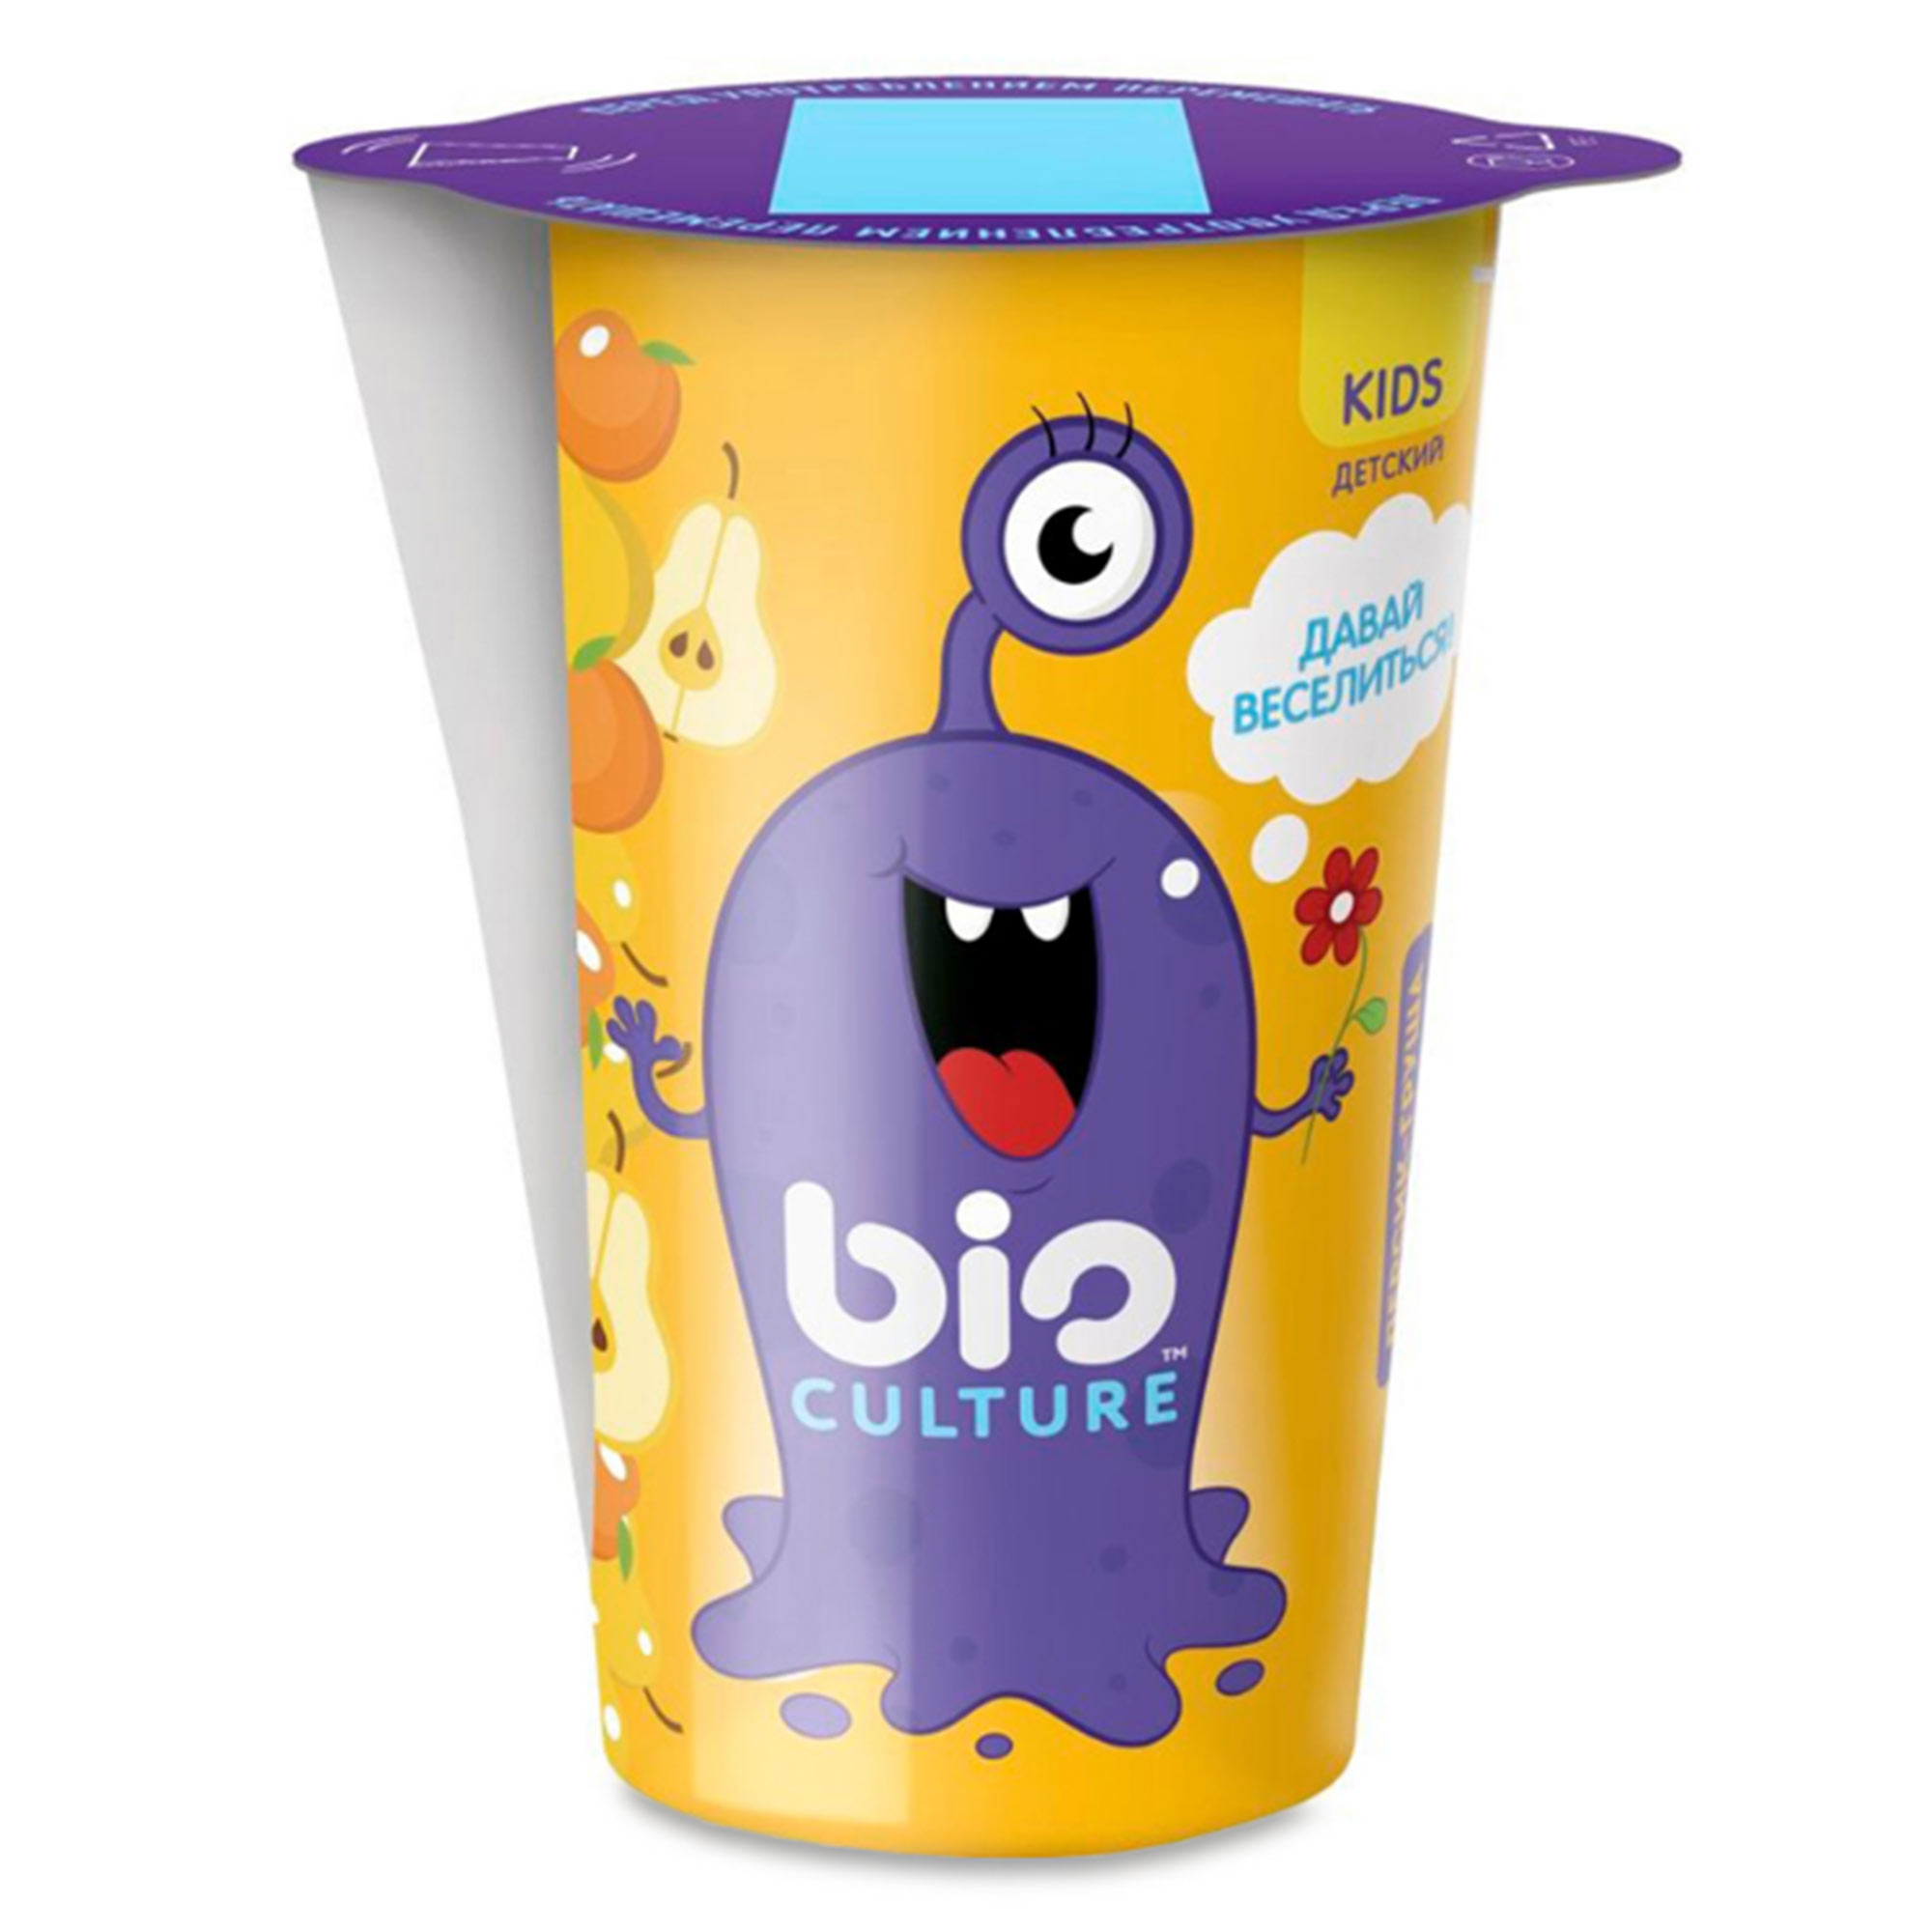 Йогурт Bio Culture Kids Персик, груша 100 г